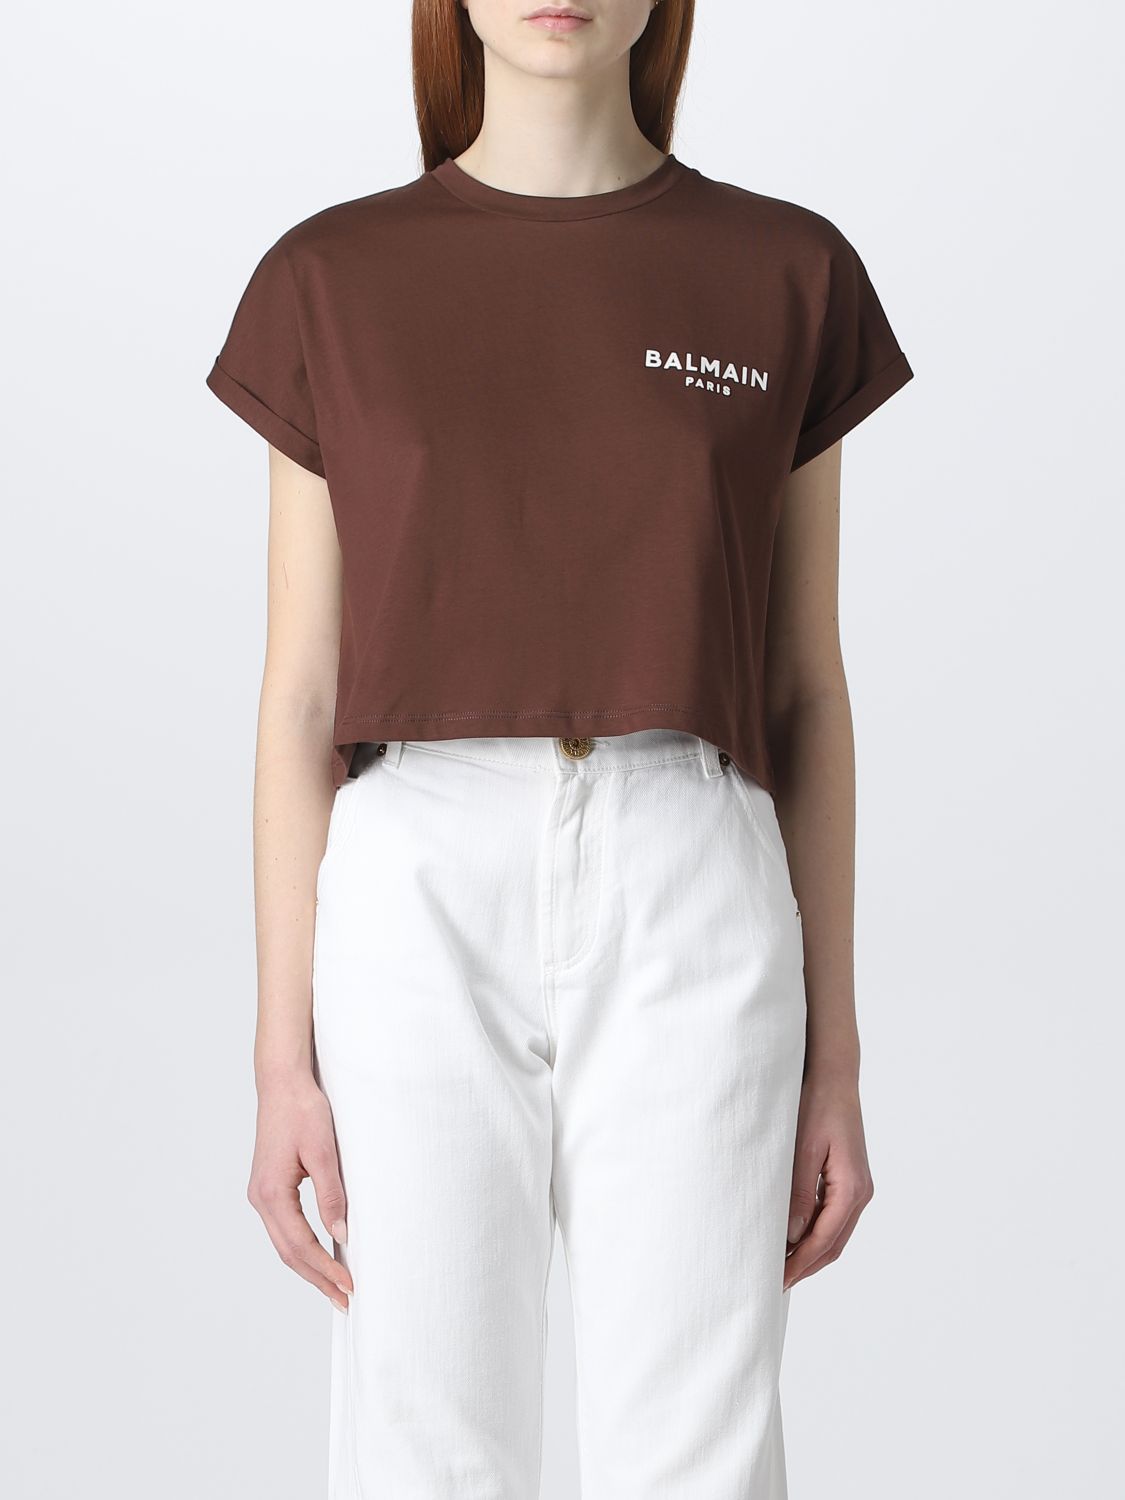 Balmain Cotton T-shirt In Brown